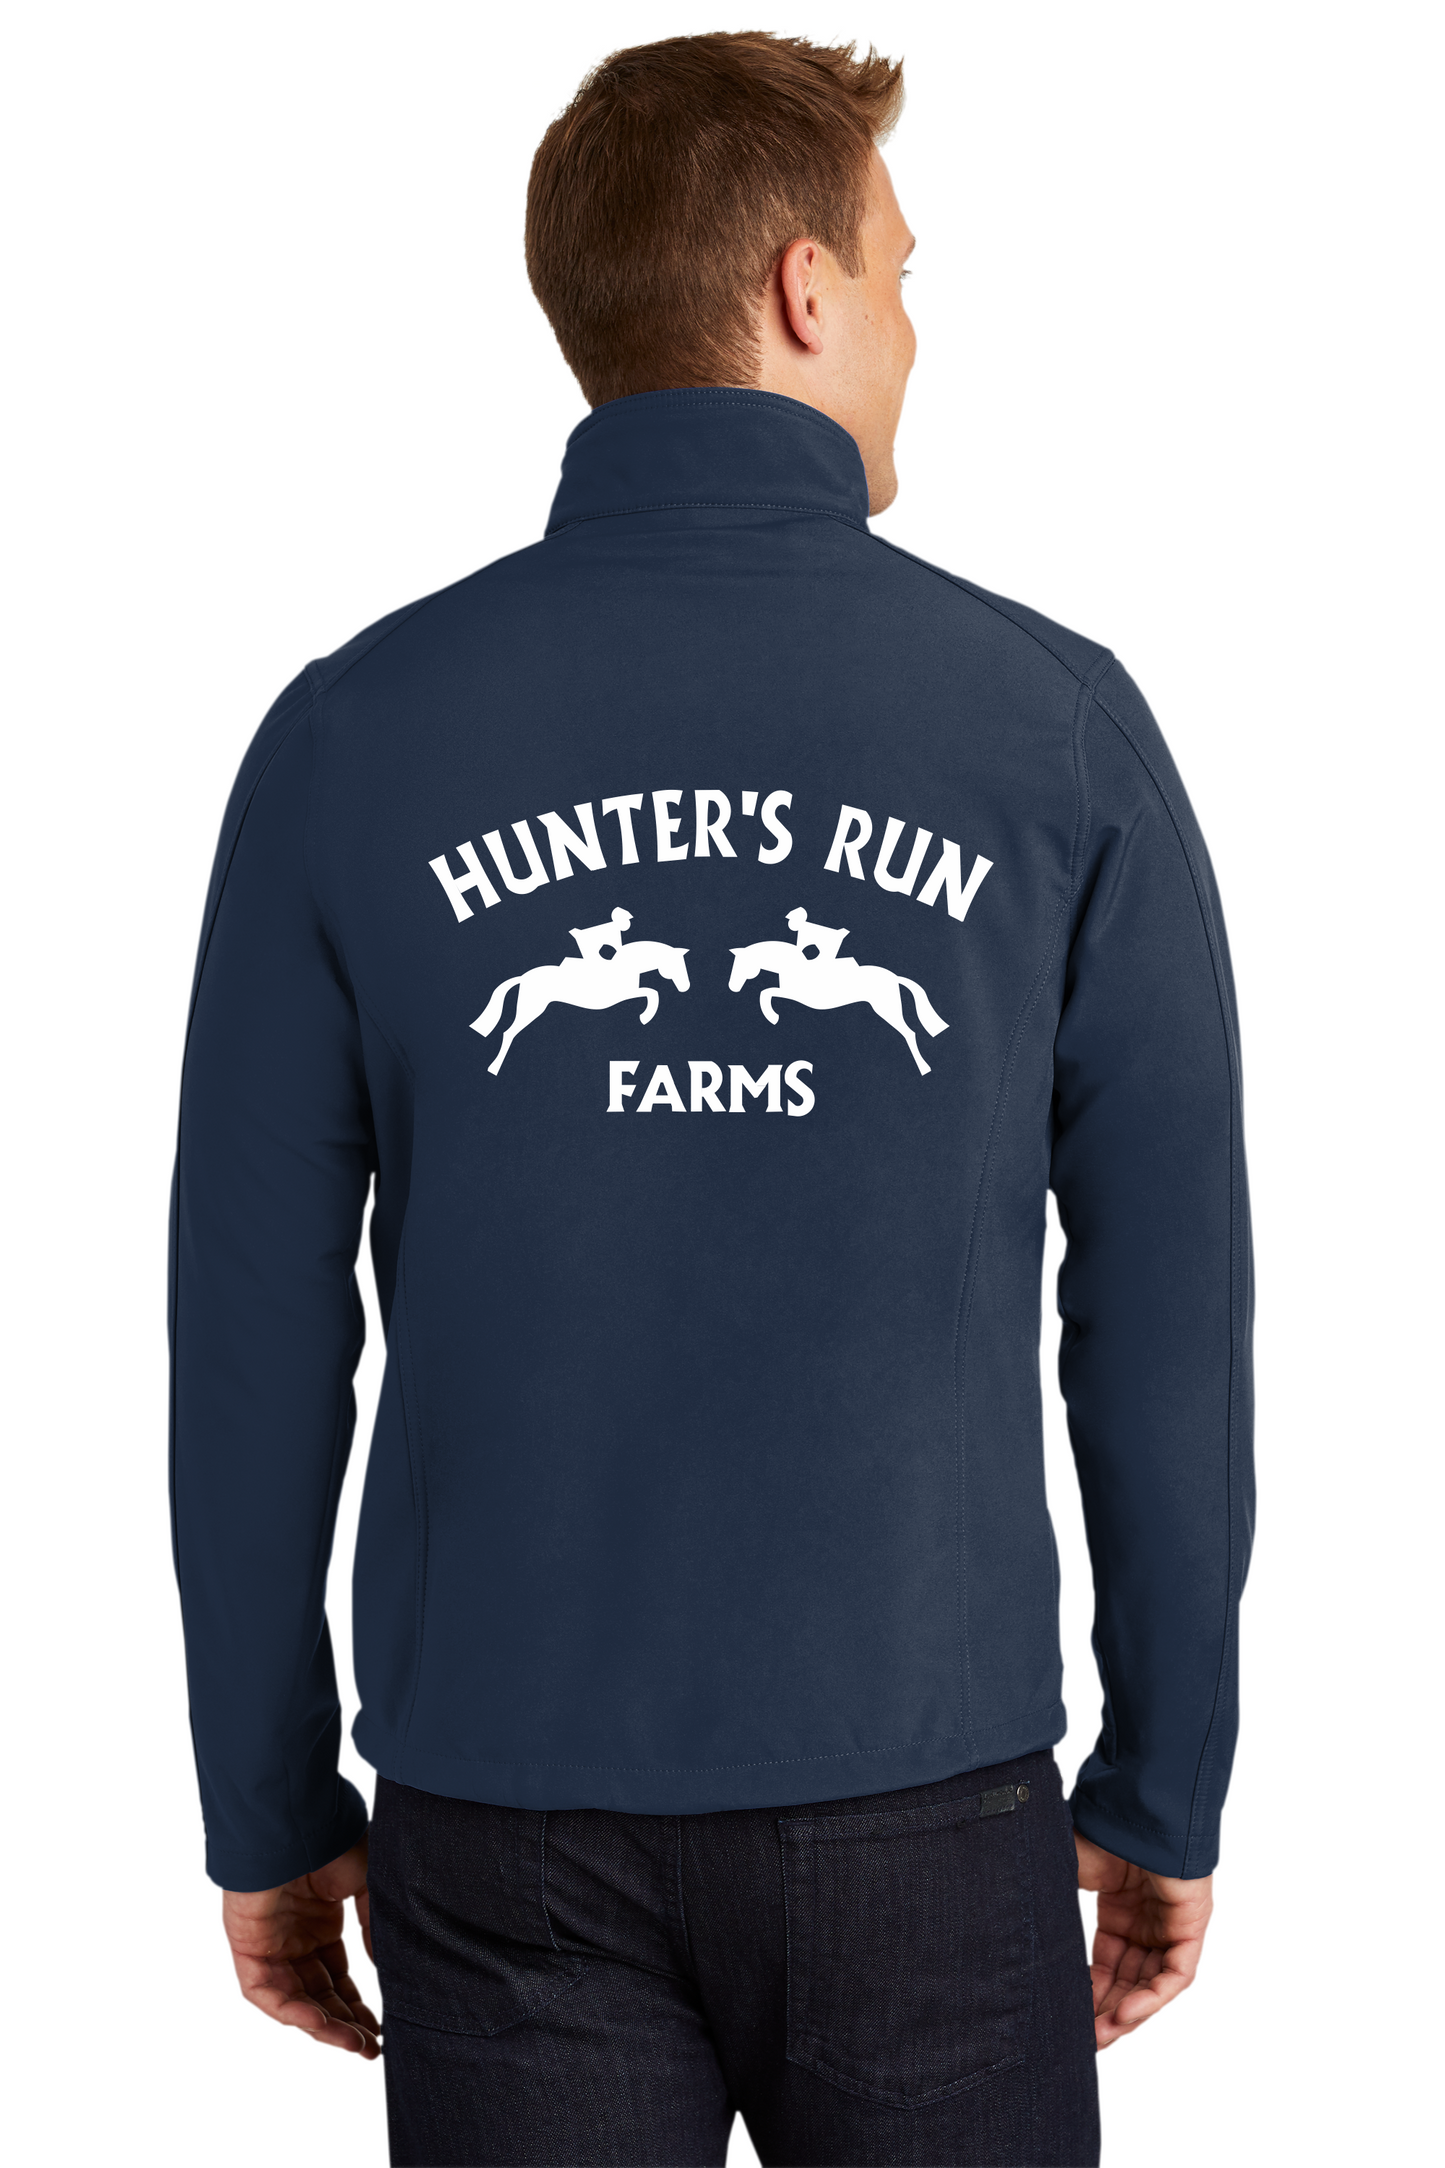 Hunter's Run Farm Men's jacket